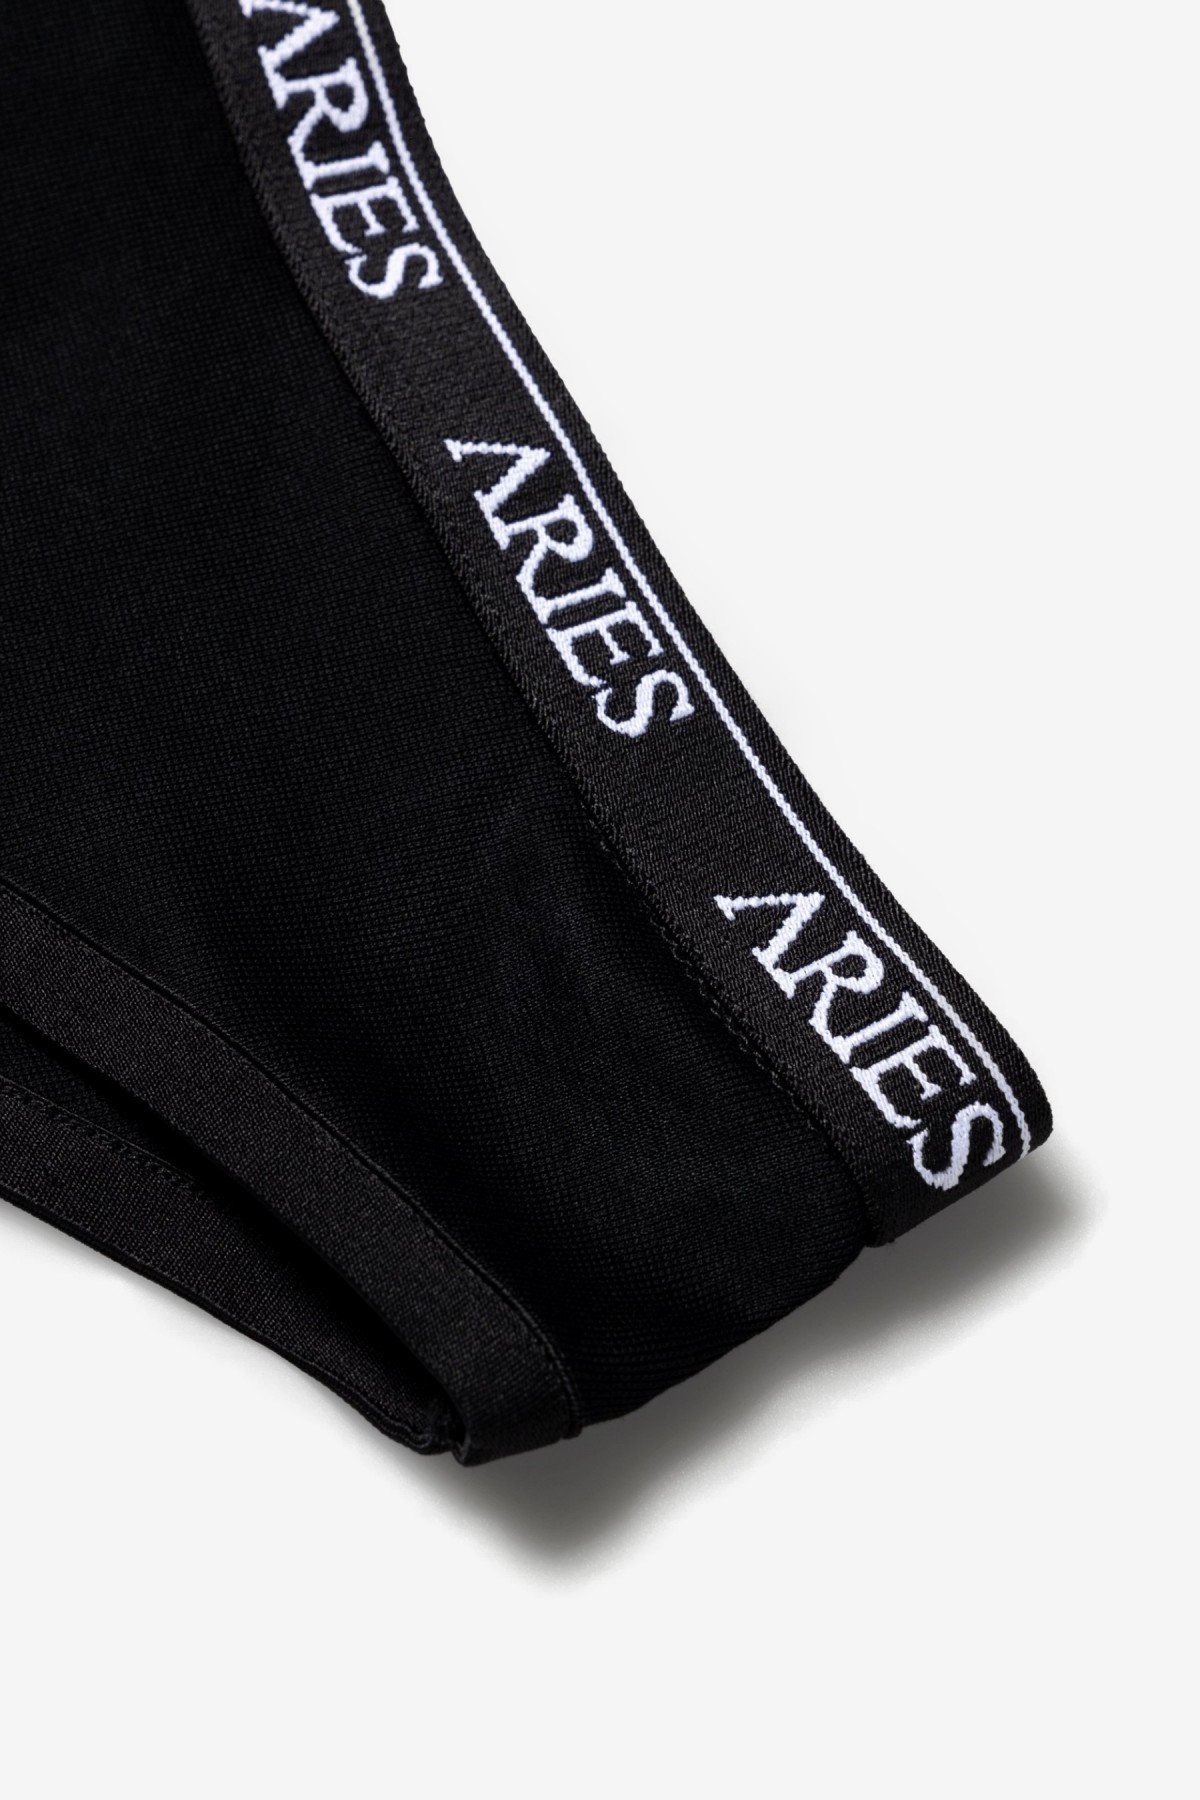 Aries Arise Mercerised Cotton Hipster Briefs in Black